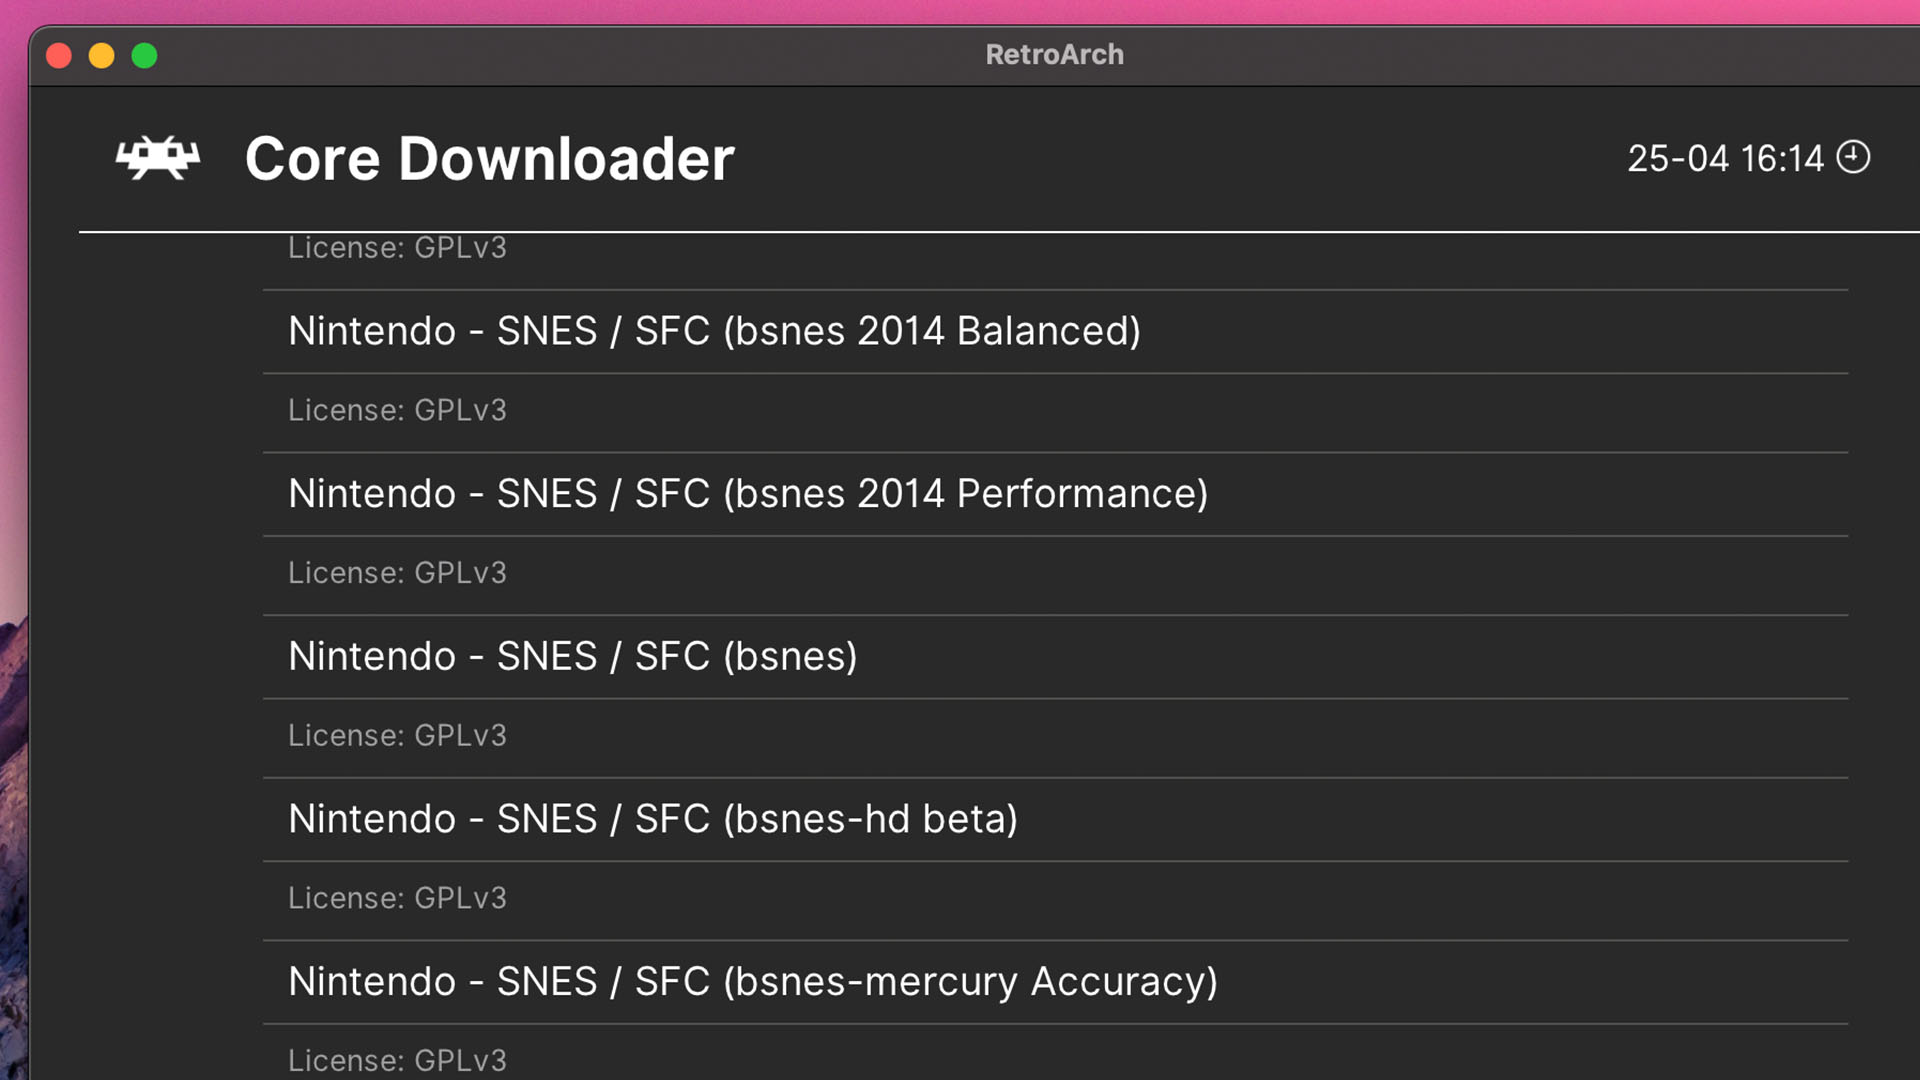 RetroArch core downloader SNES